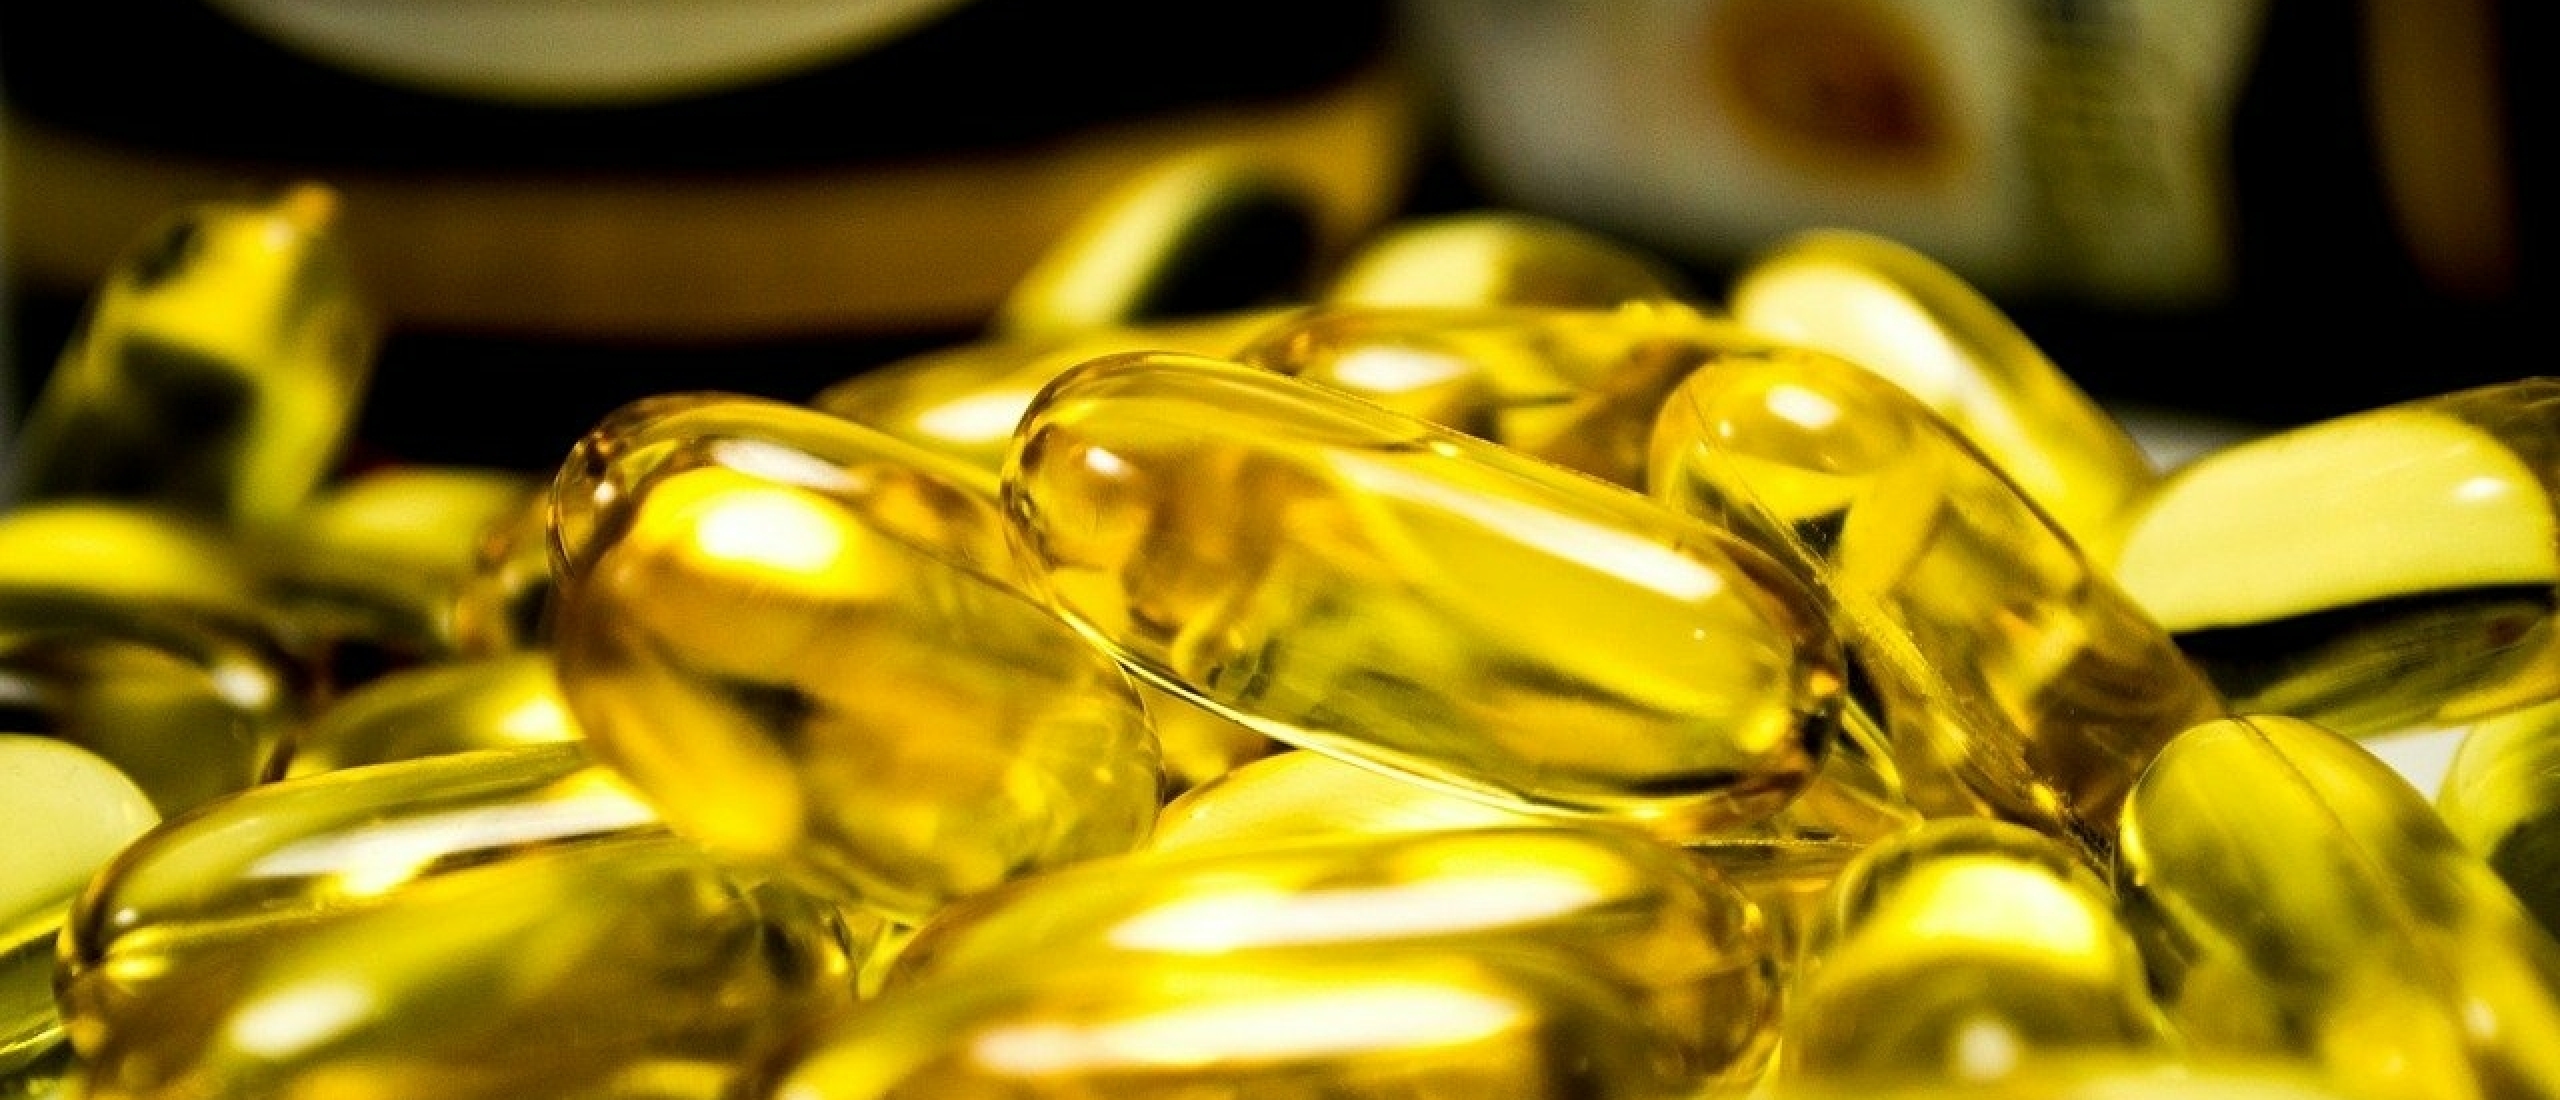 Verschillen tussen omega-3 supplementen